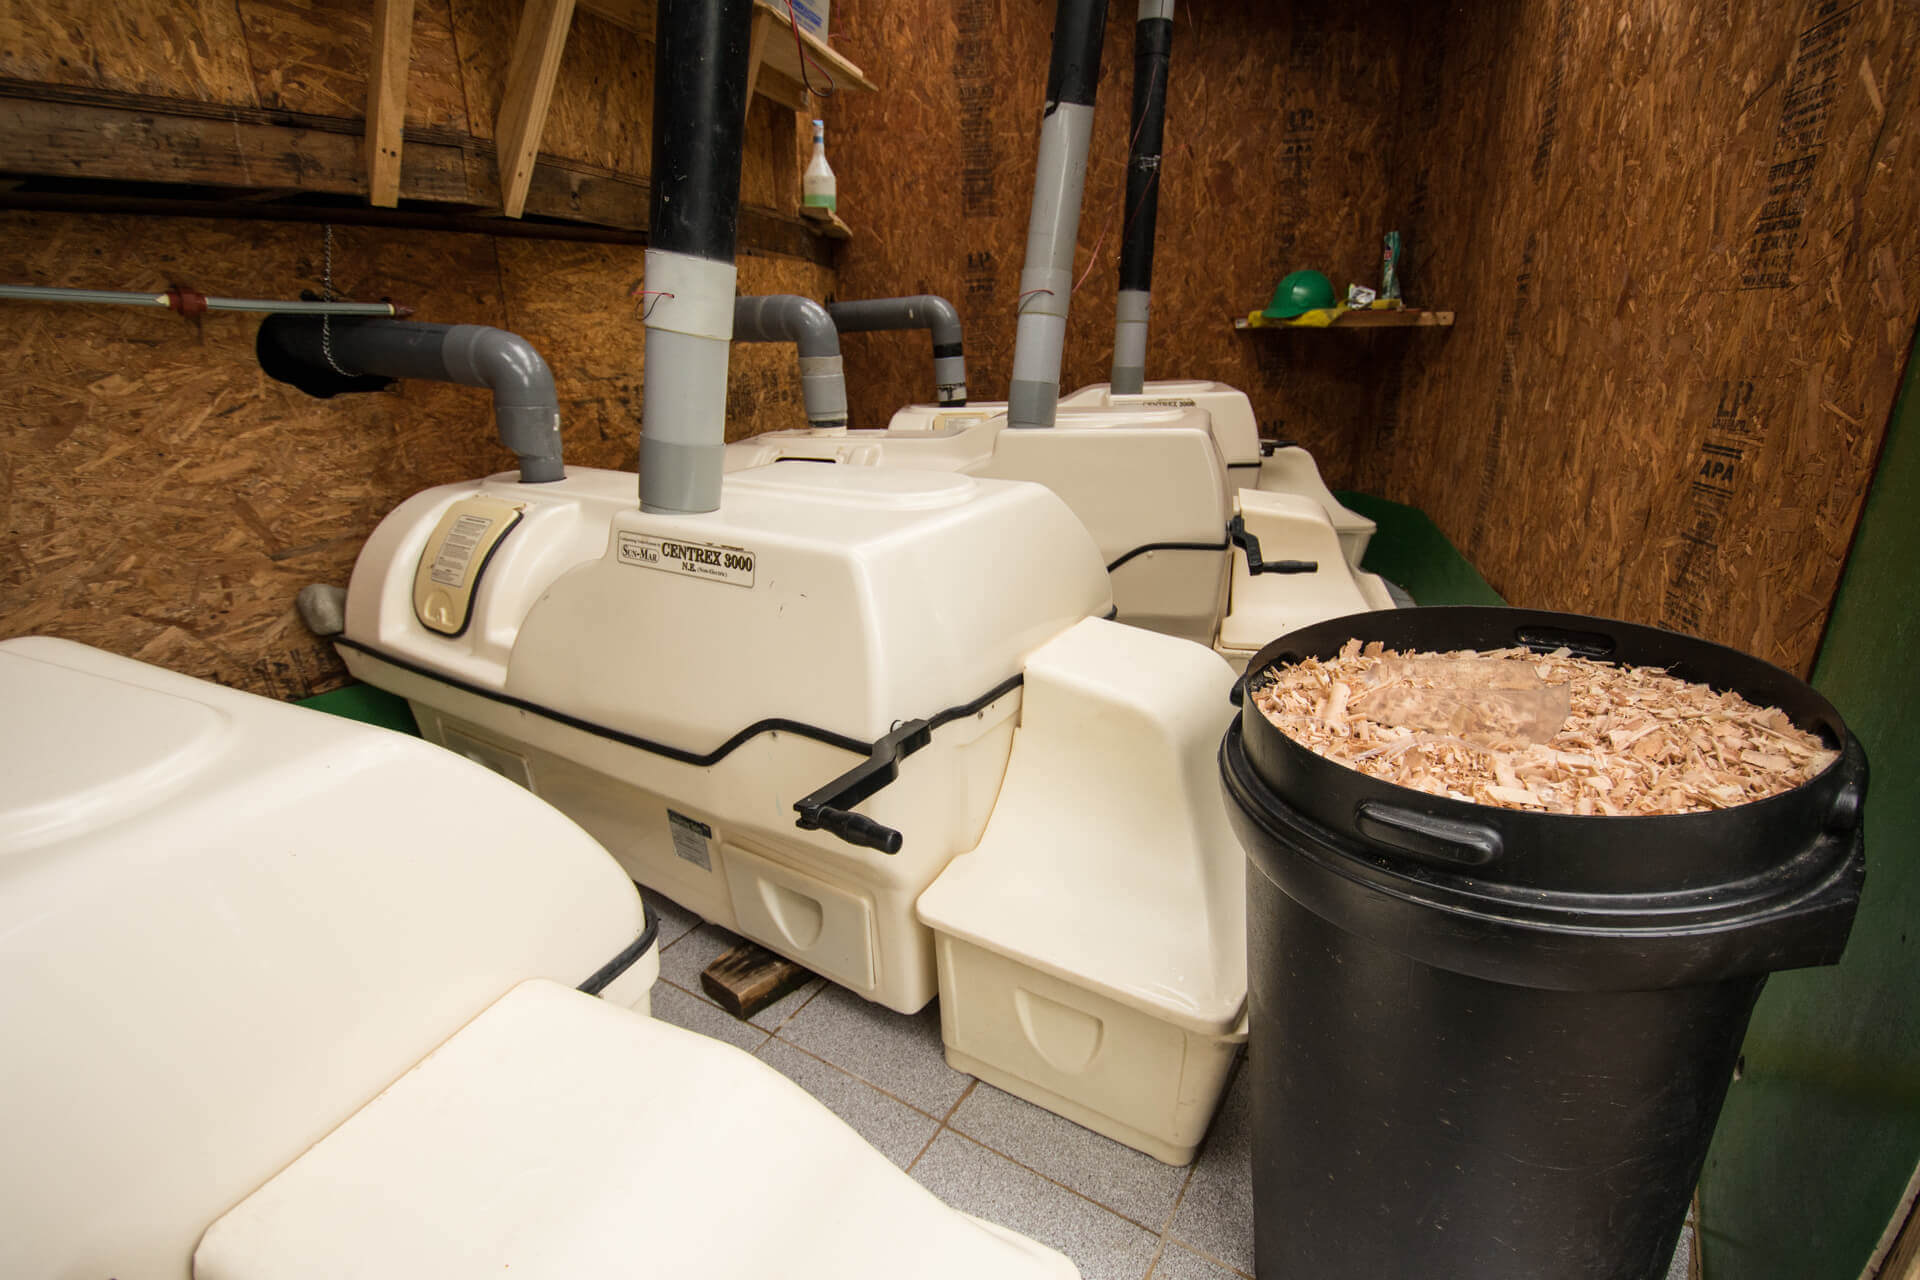 Composting chambers